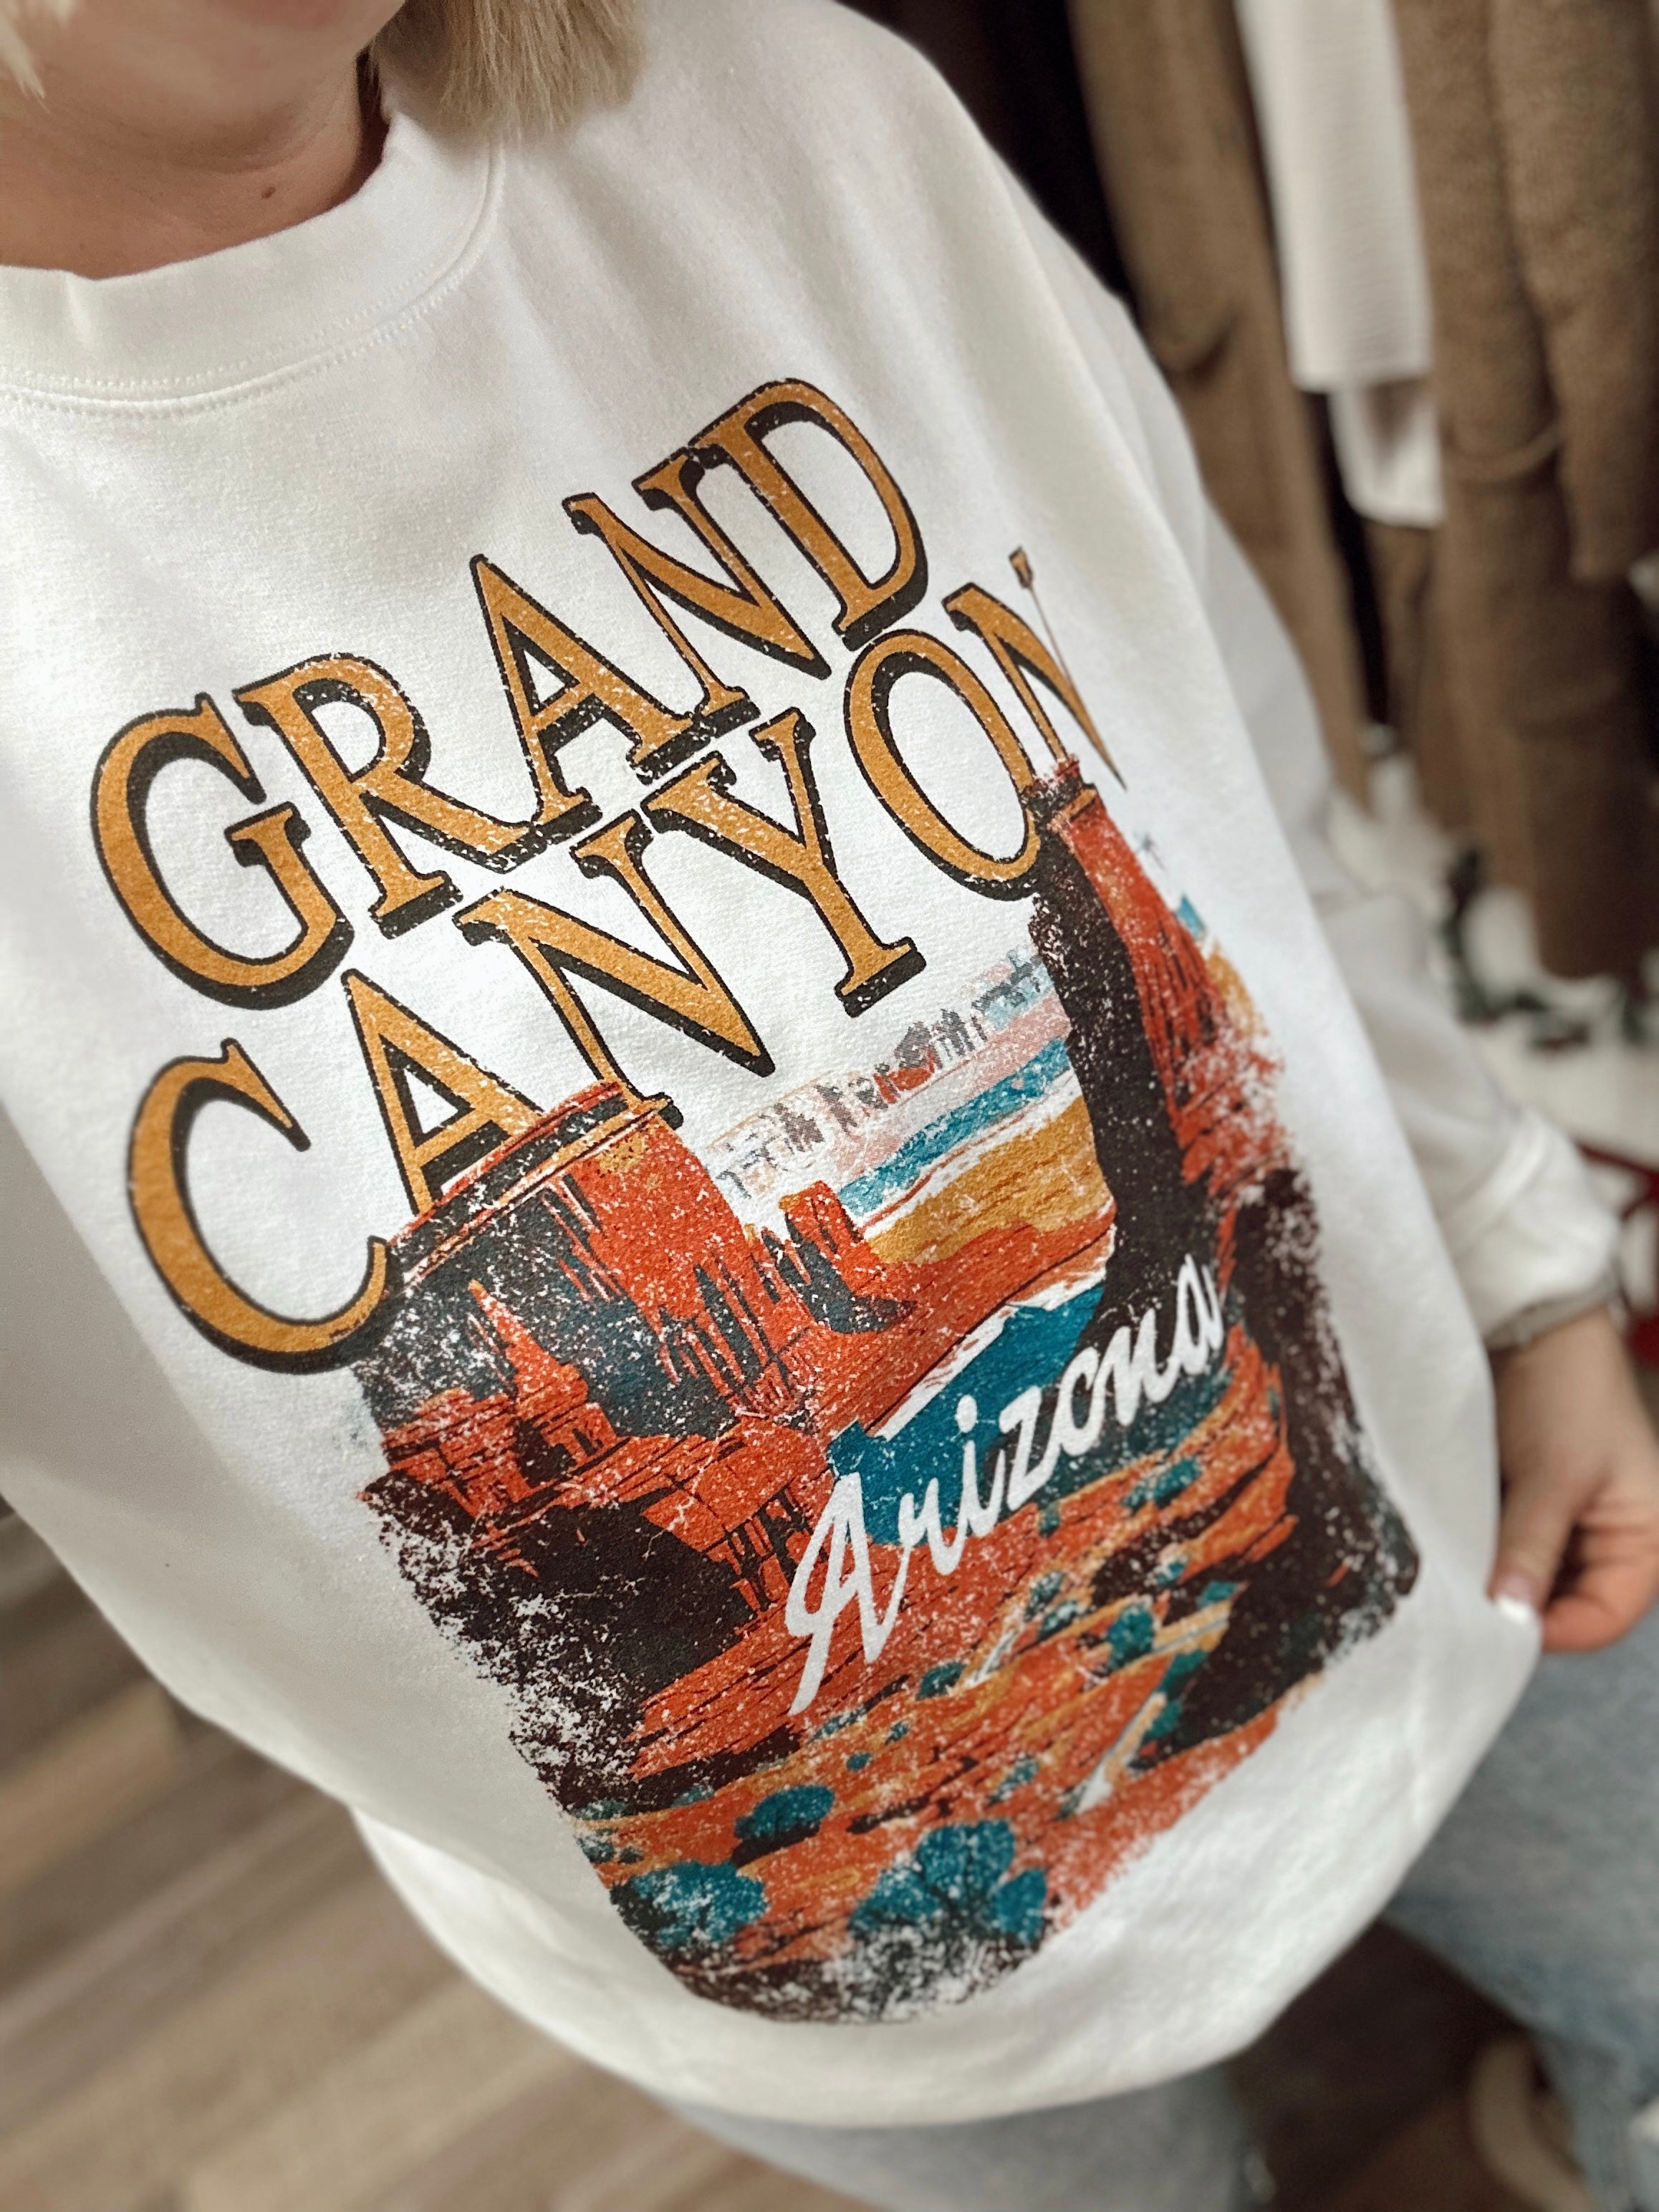 Grand Canyon Oversized Graphic Sweatshirt